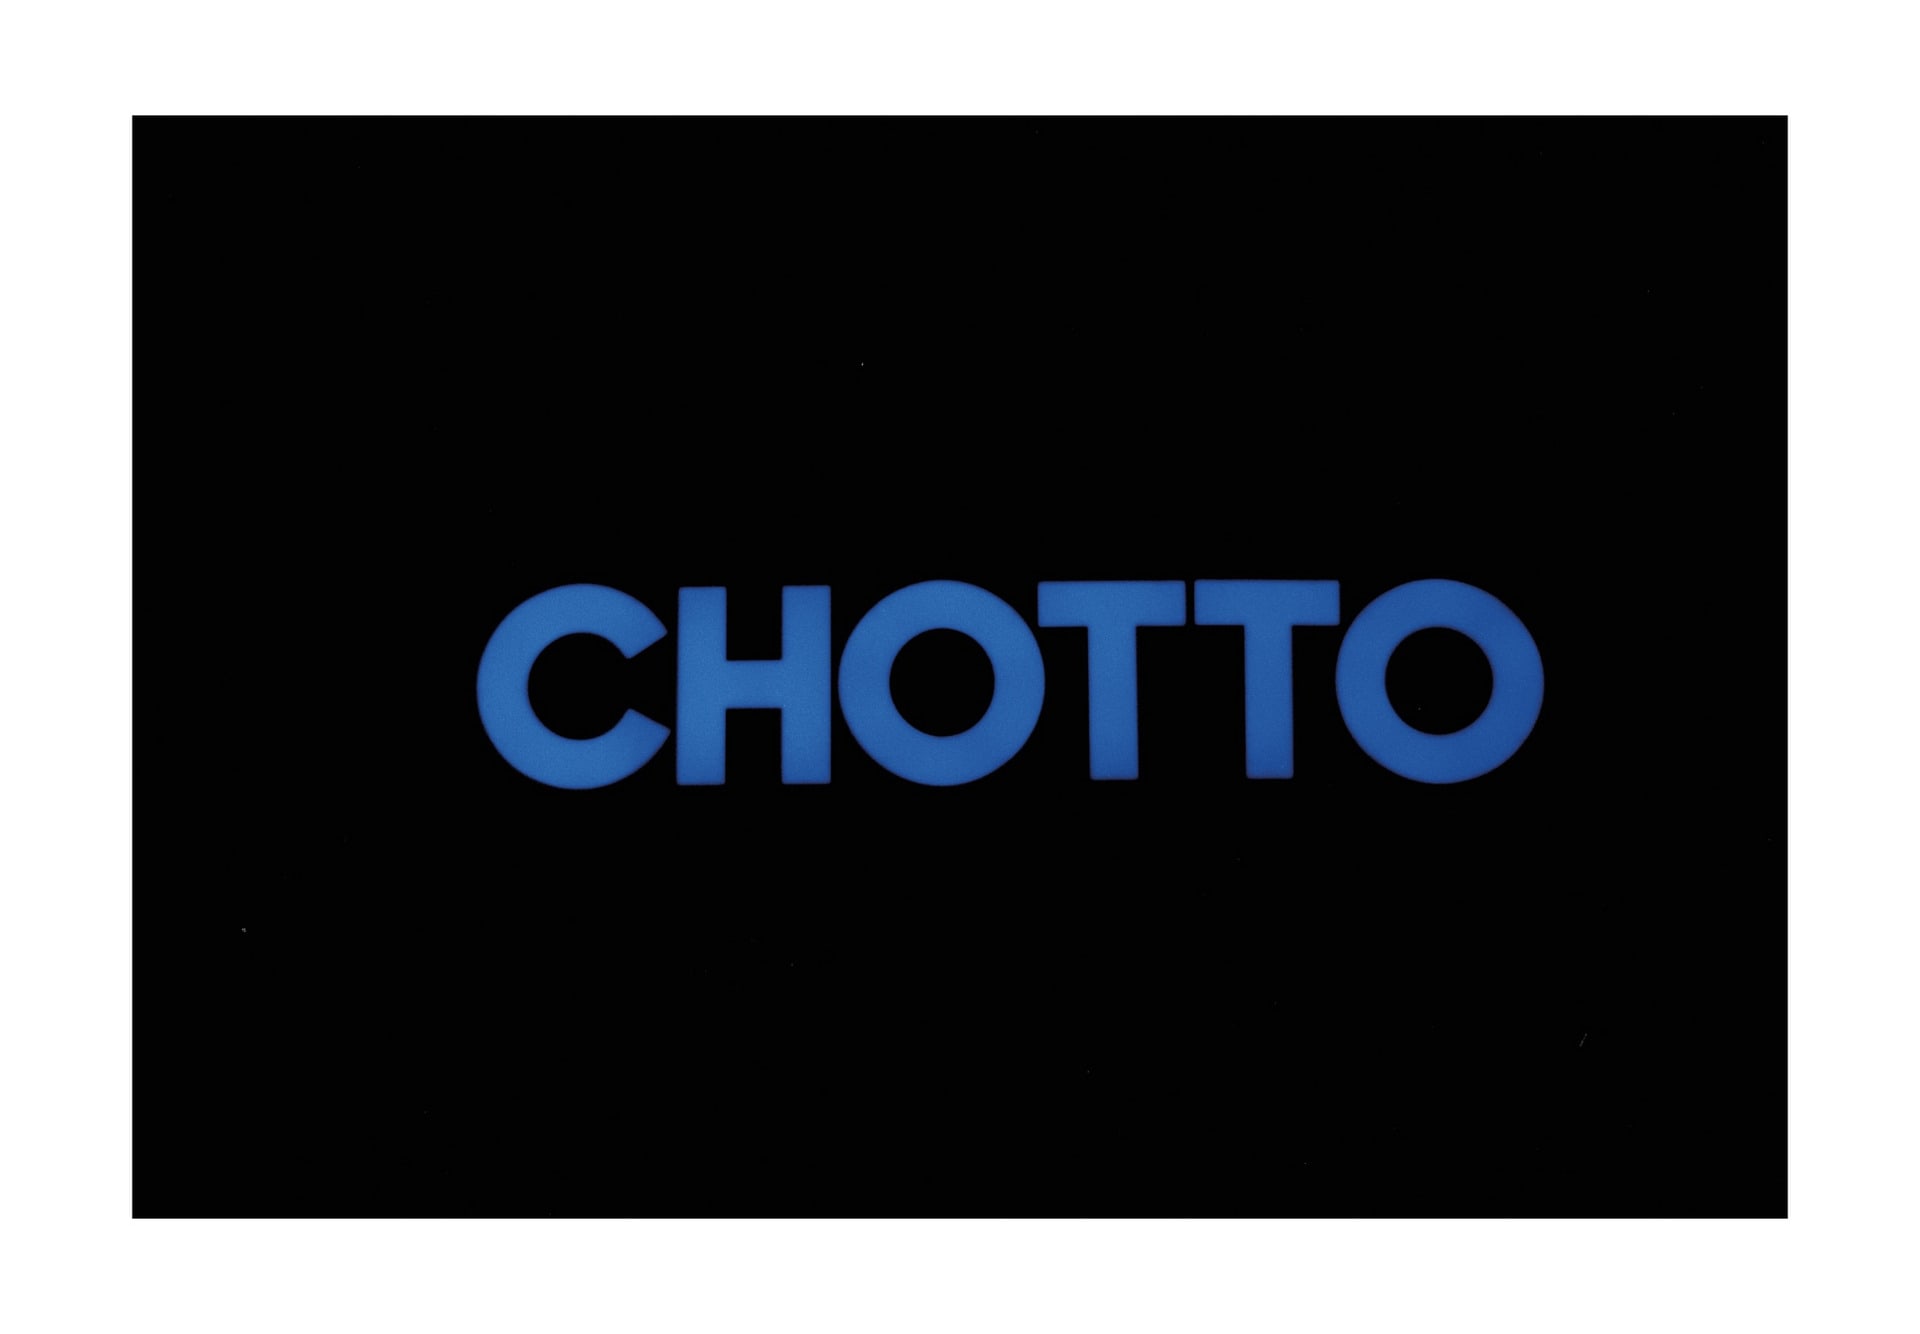 Chotto's resturant logo in Soho.